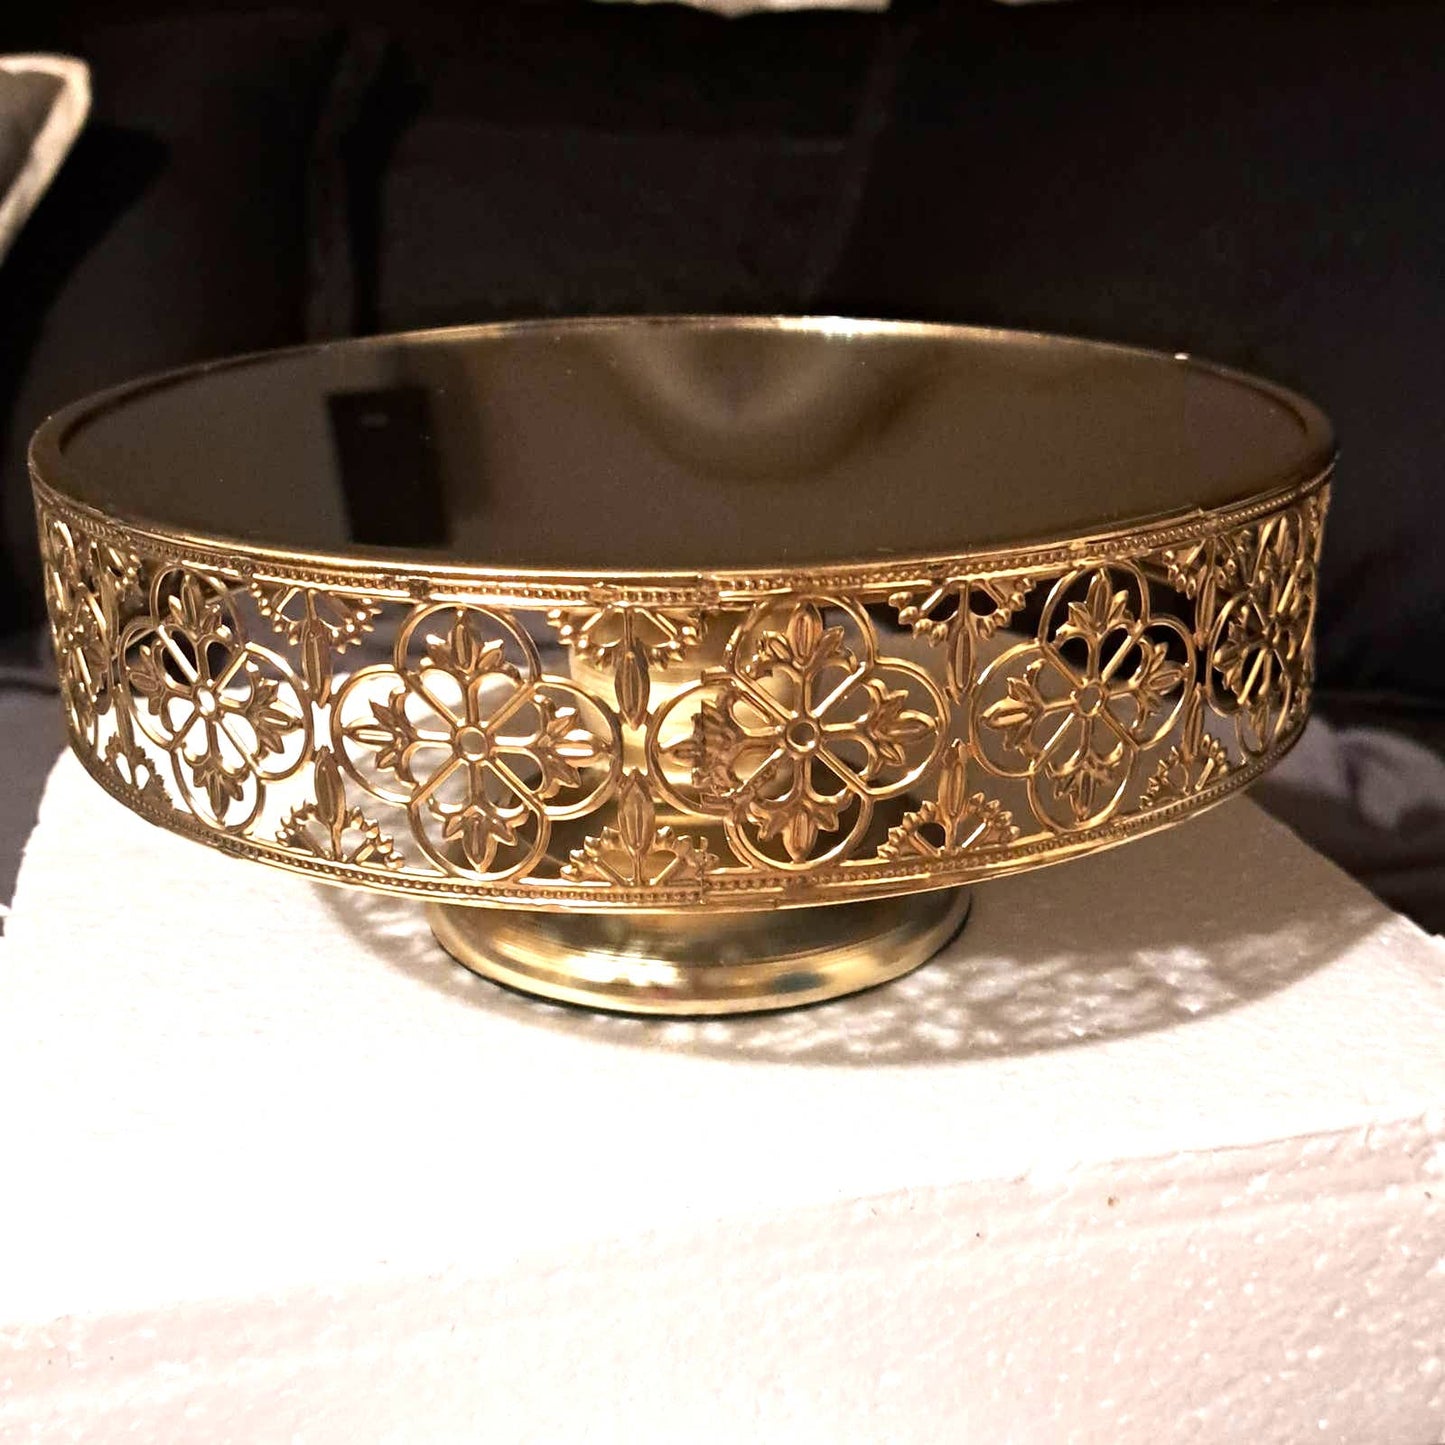 NIB- Elegant 9 inch Mirrored Intricate Gold Dessert Party Tray